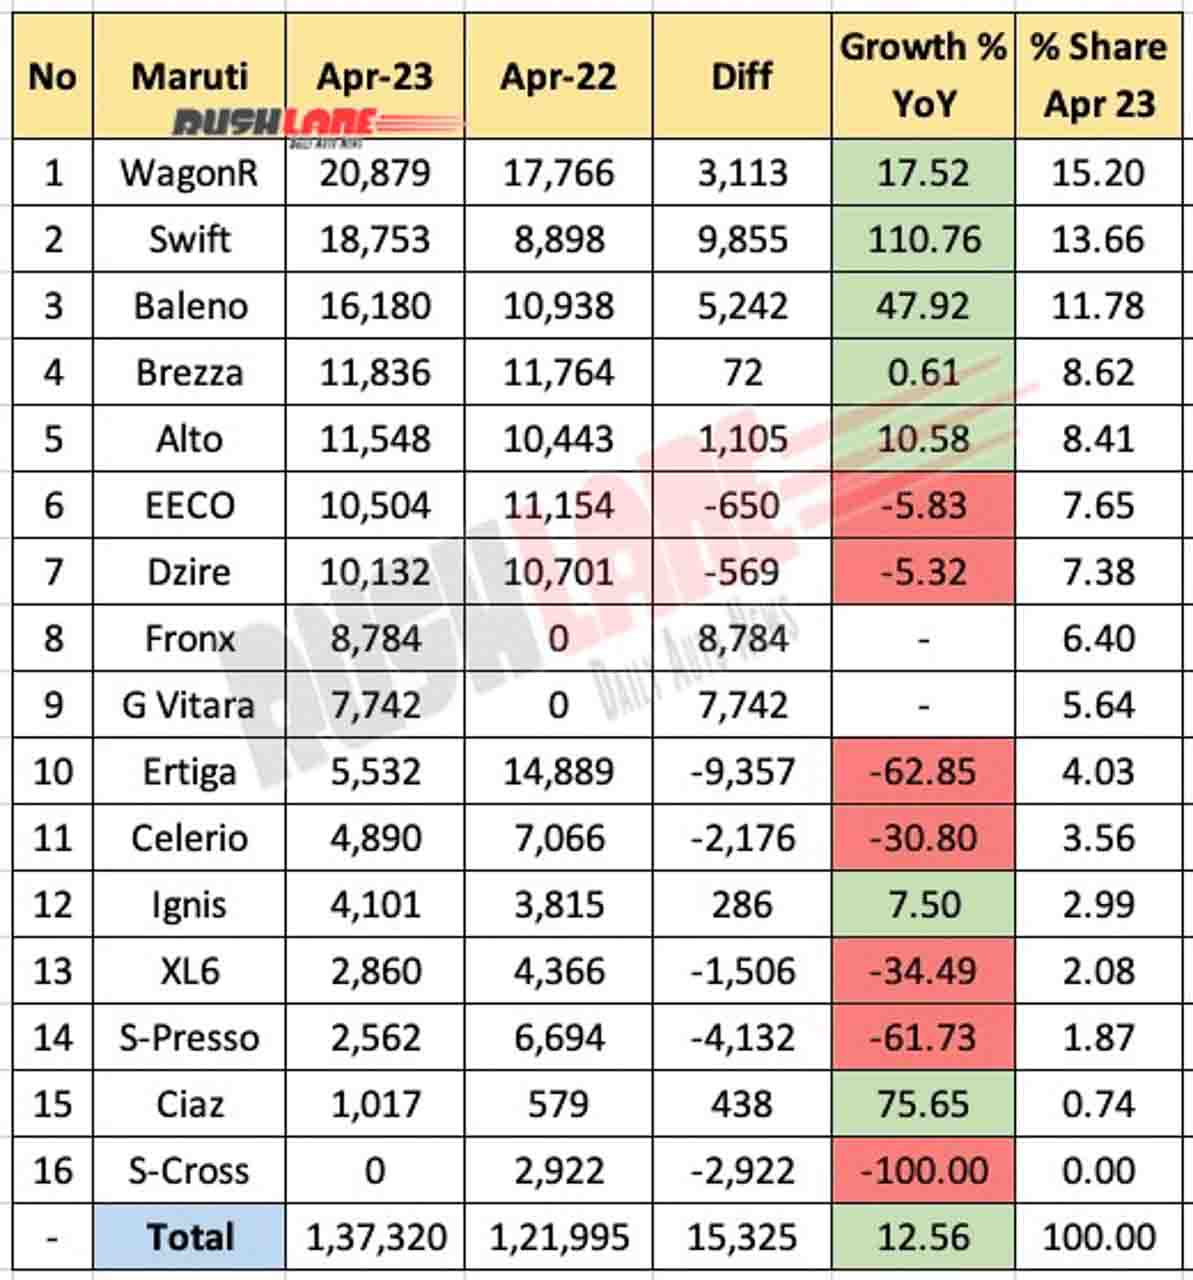 Maruti Sales Breakup April 2023 vs April 2022 - YoY analysis